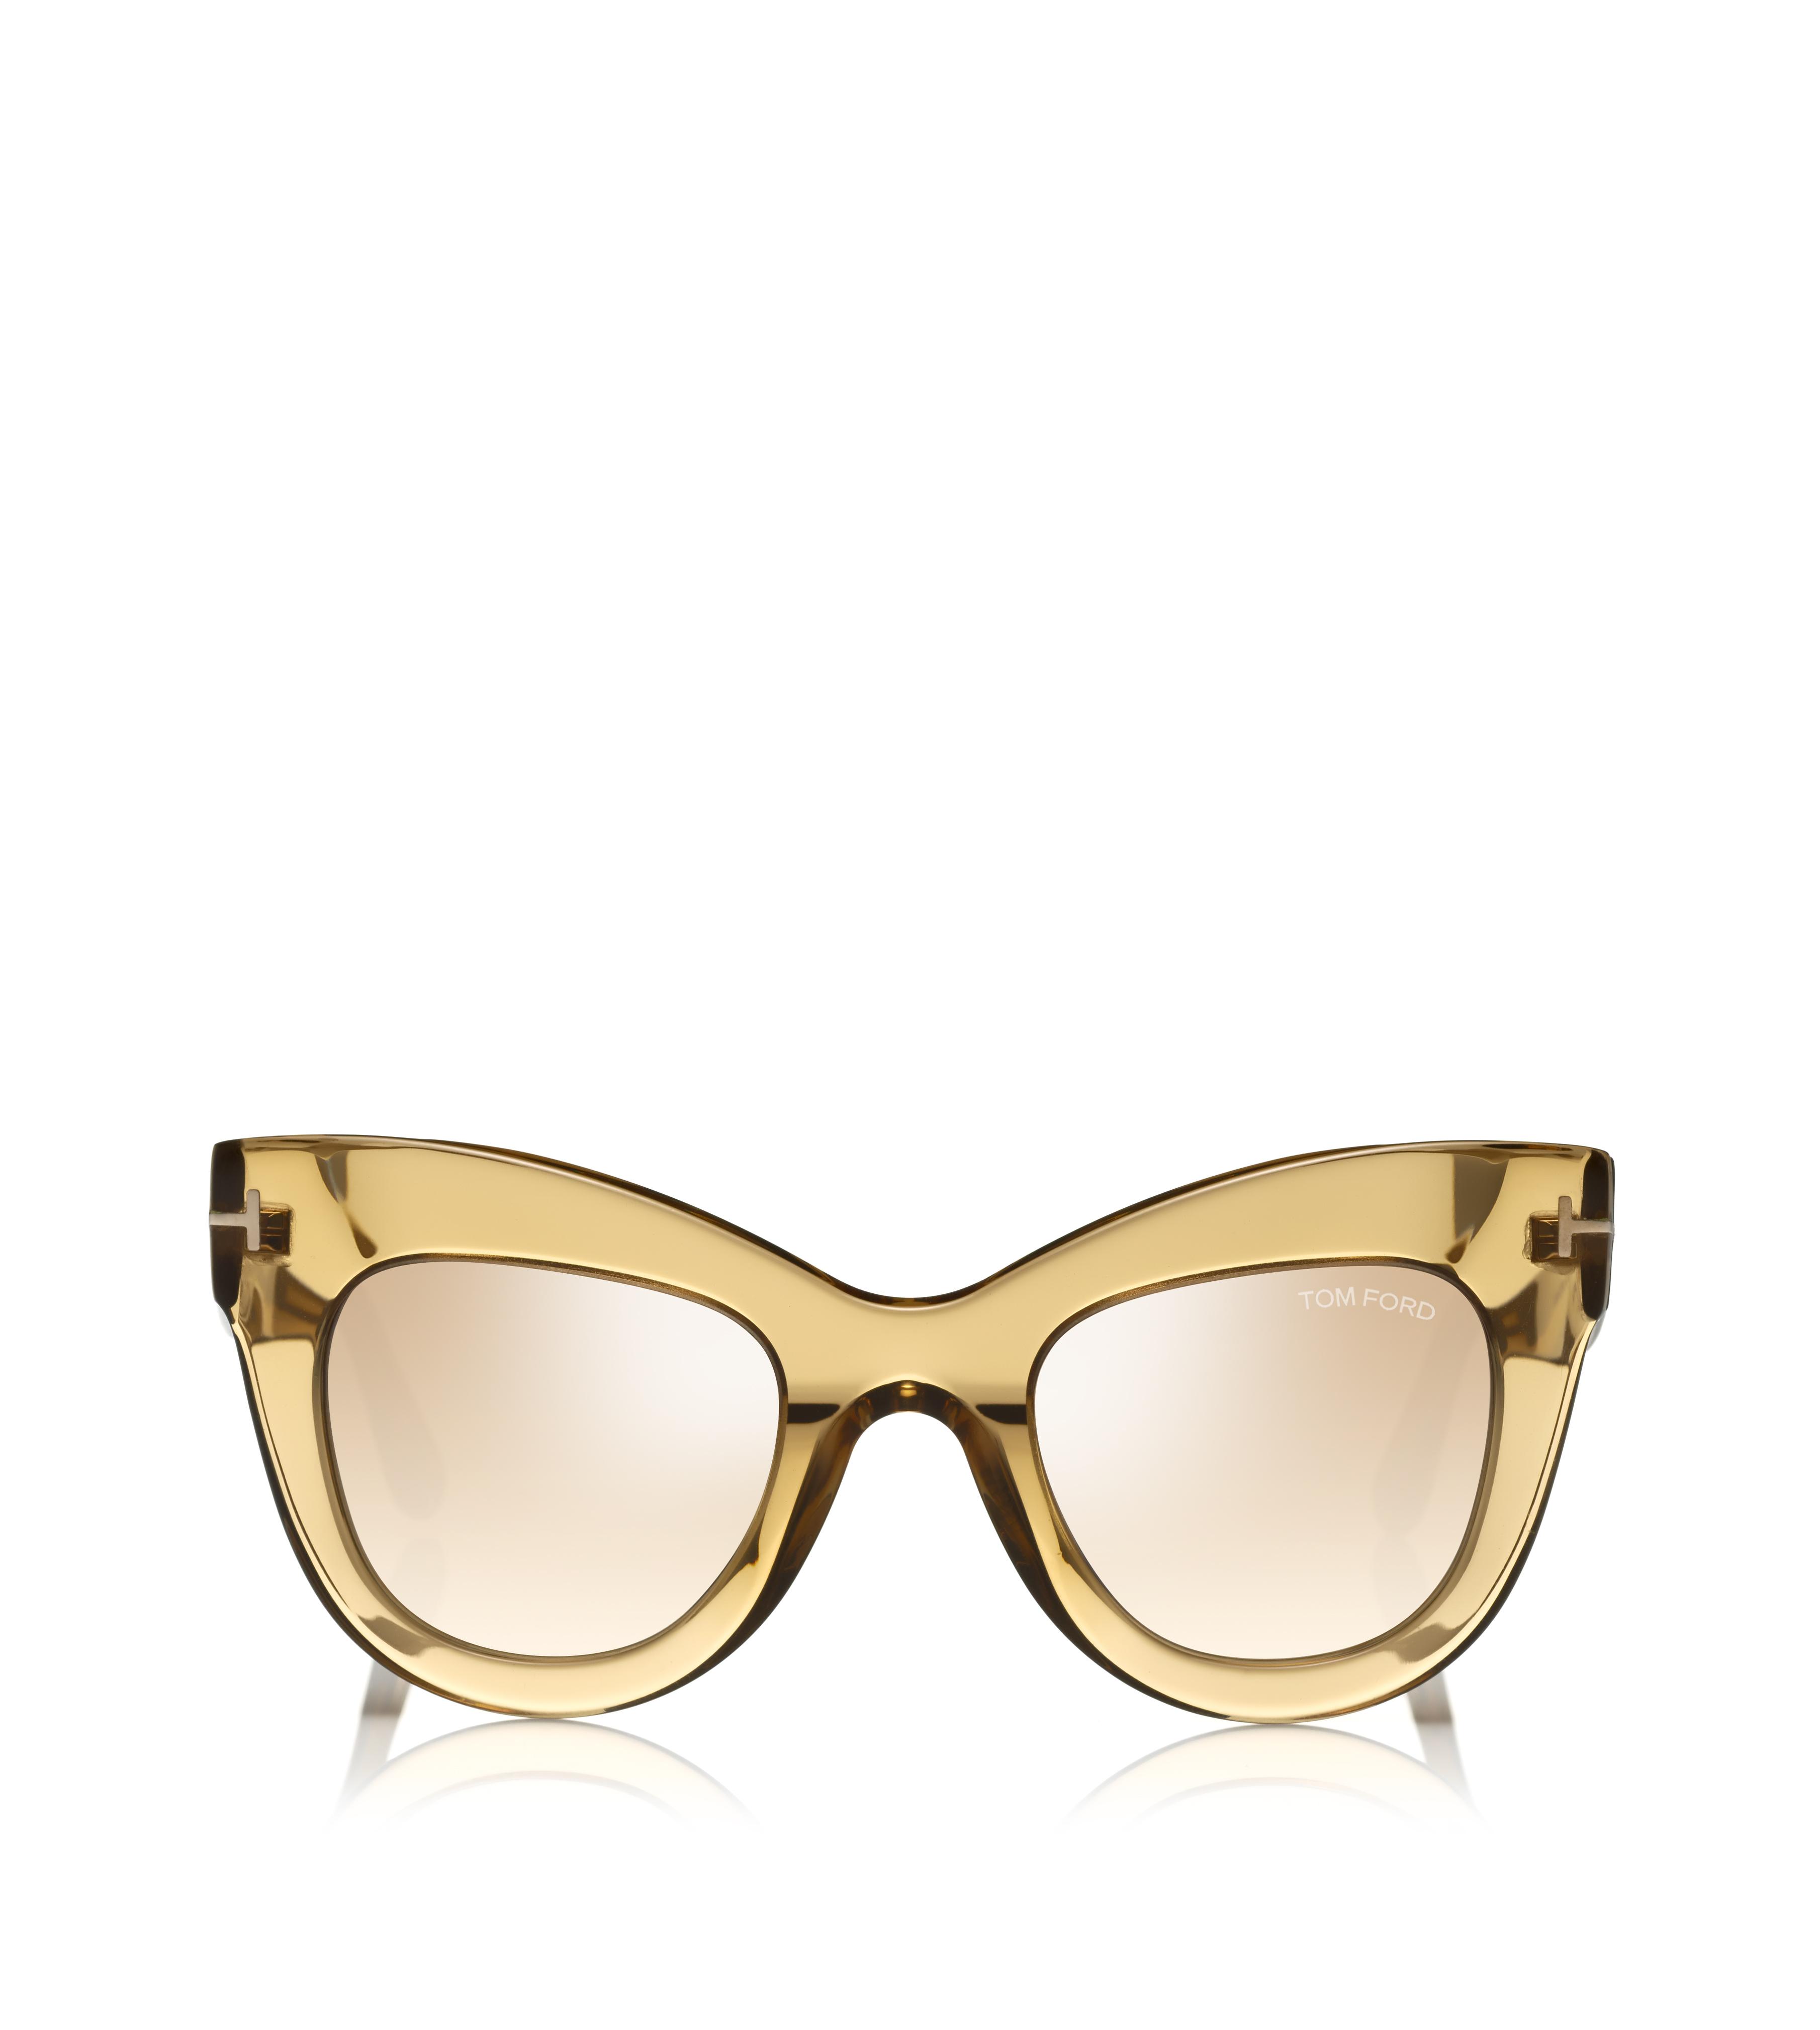 Sunglasses - Women's Eyewear | TomFord.com